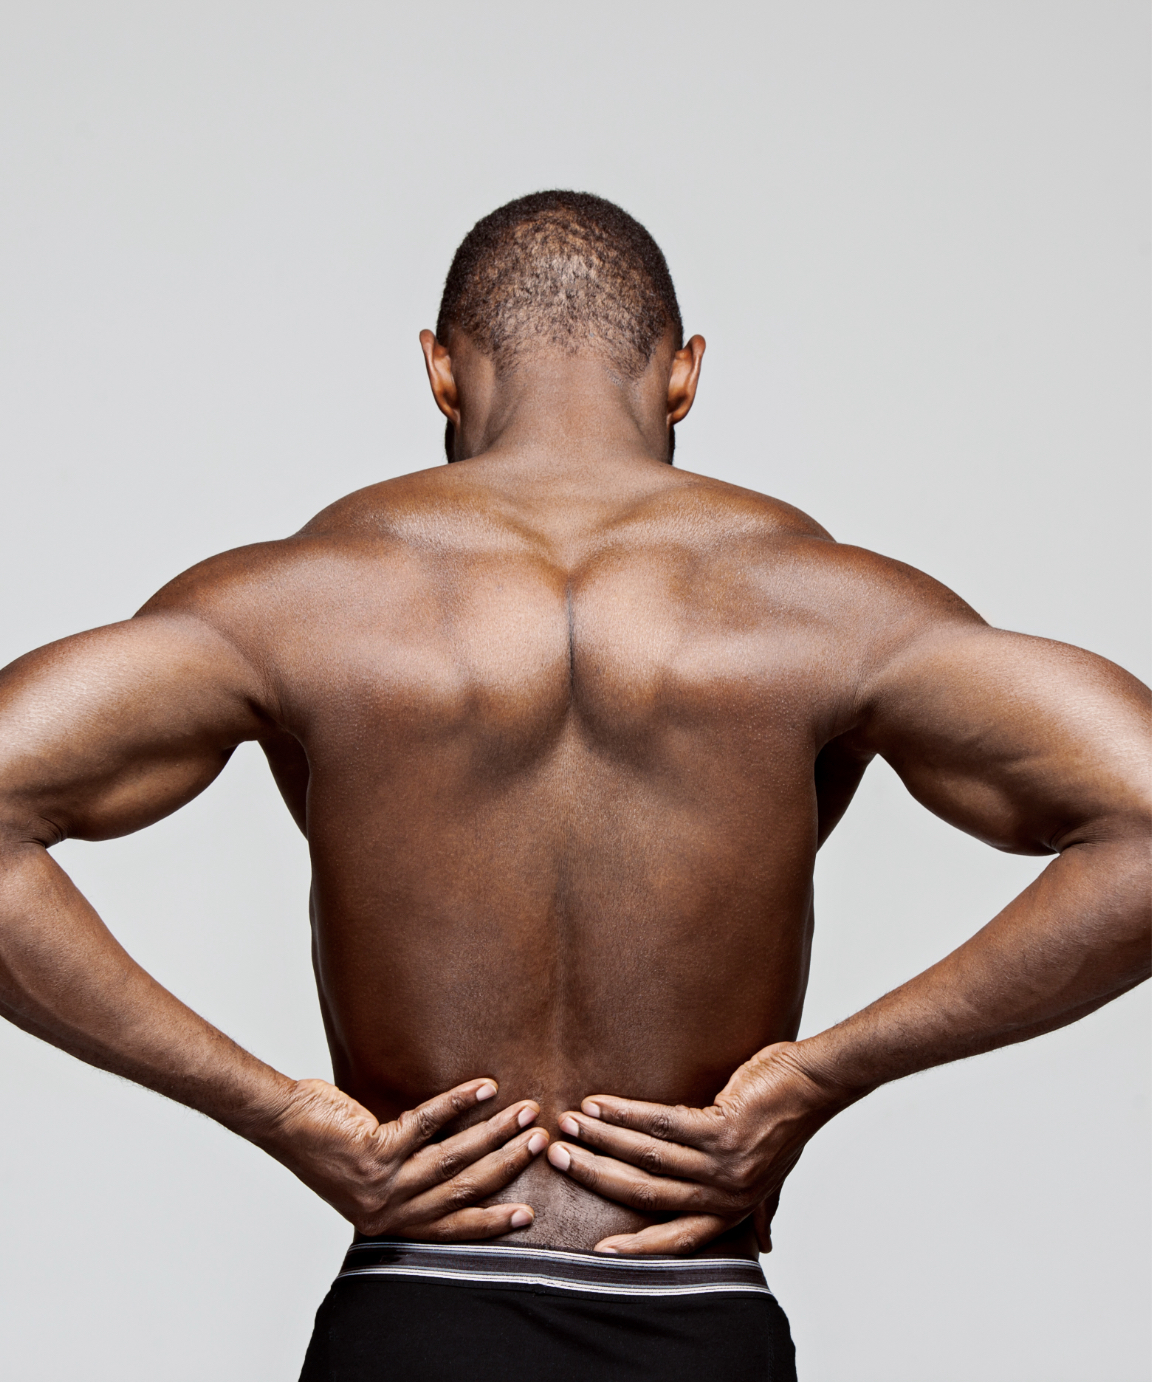 Muscular man touching his lower back